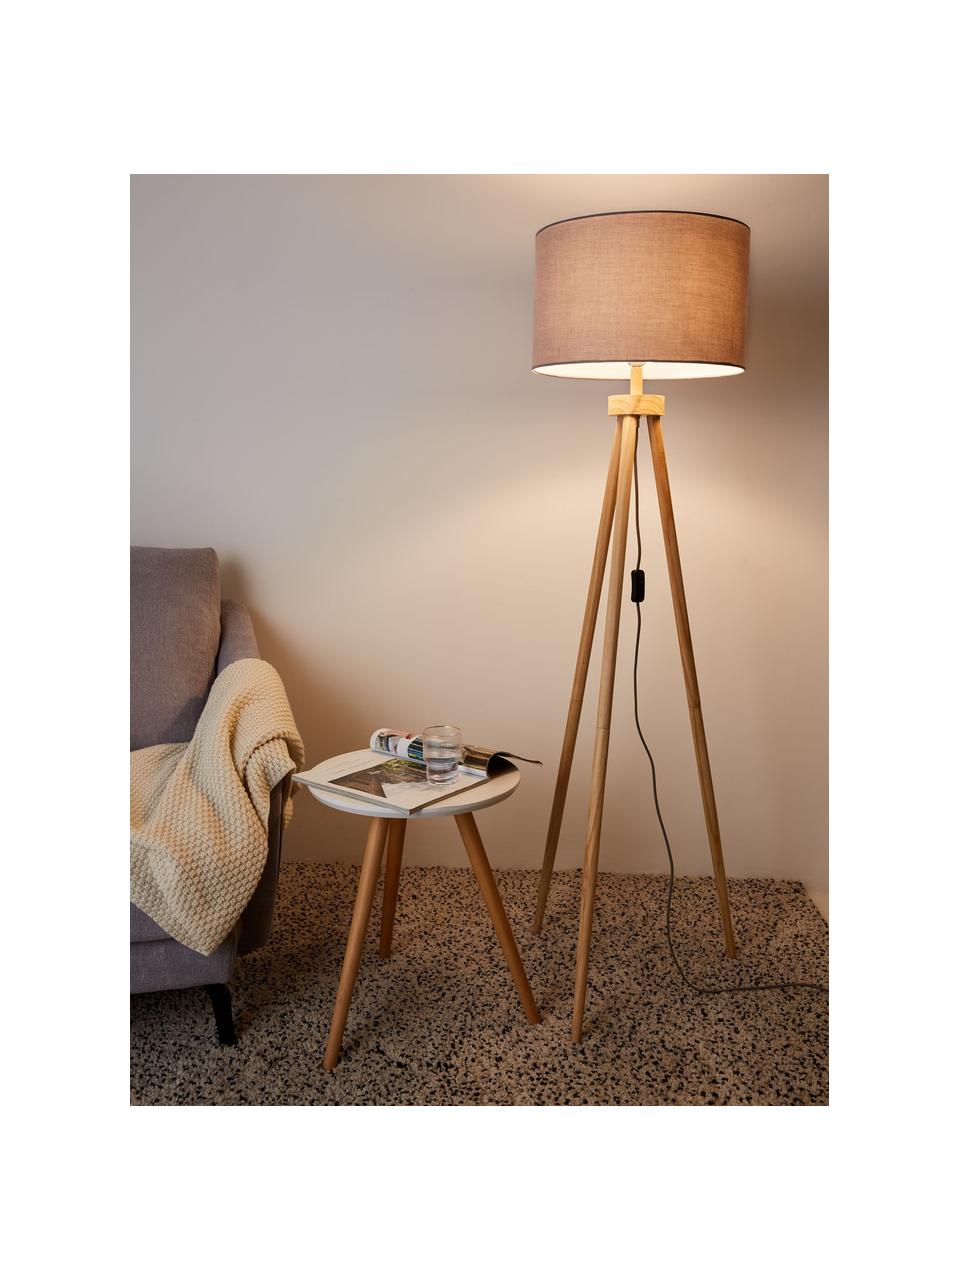 Stojacia tripod lampa s dreveným podstavcom Grand Coziness, Sivá, drevo